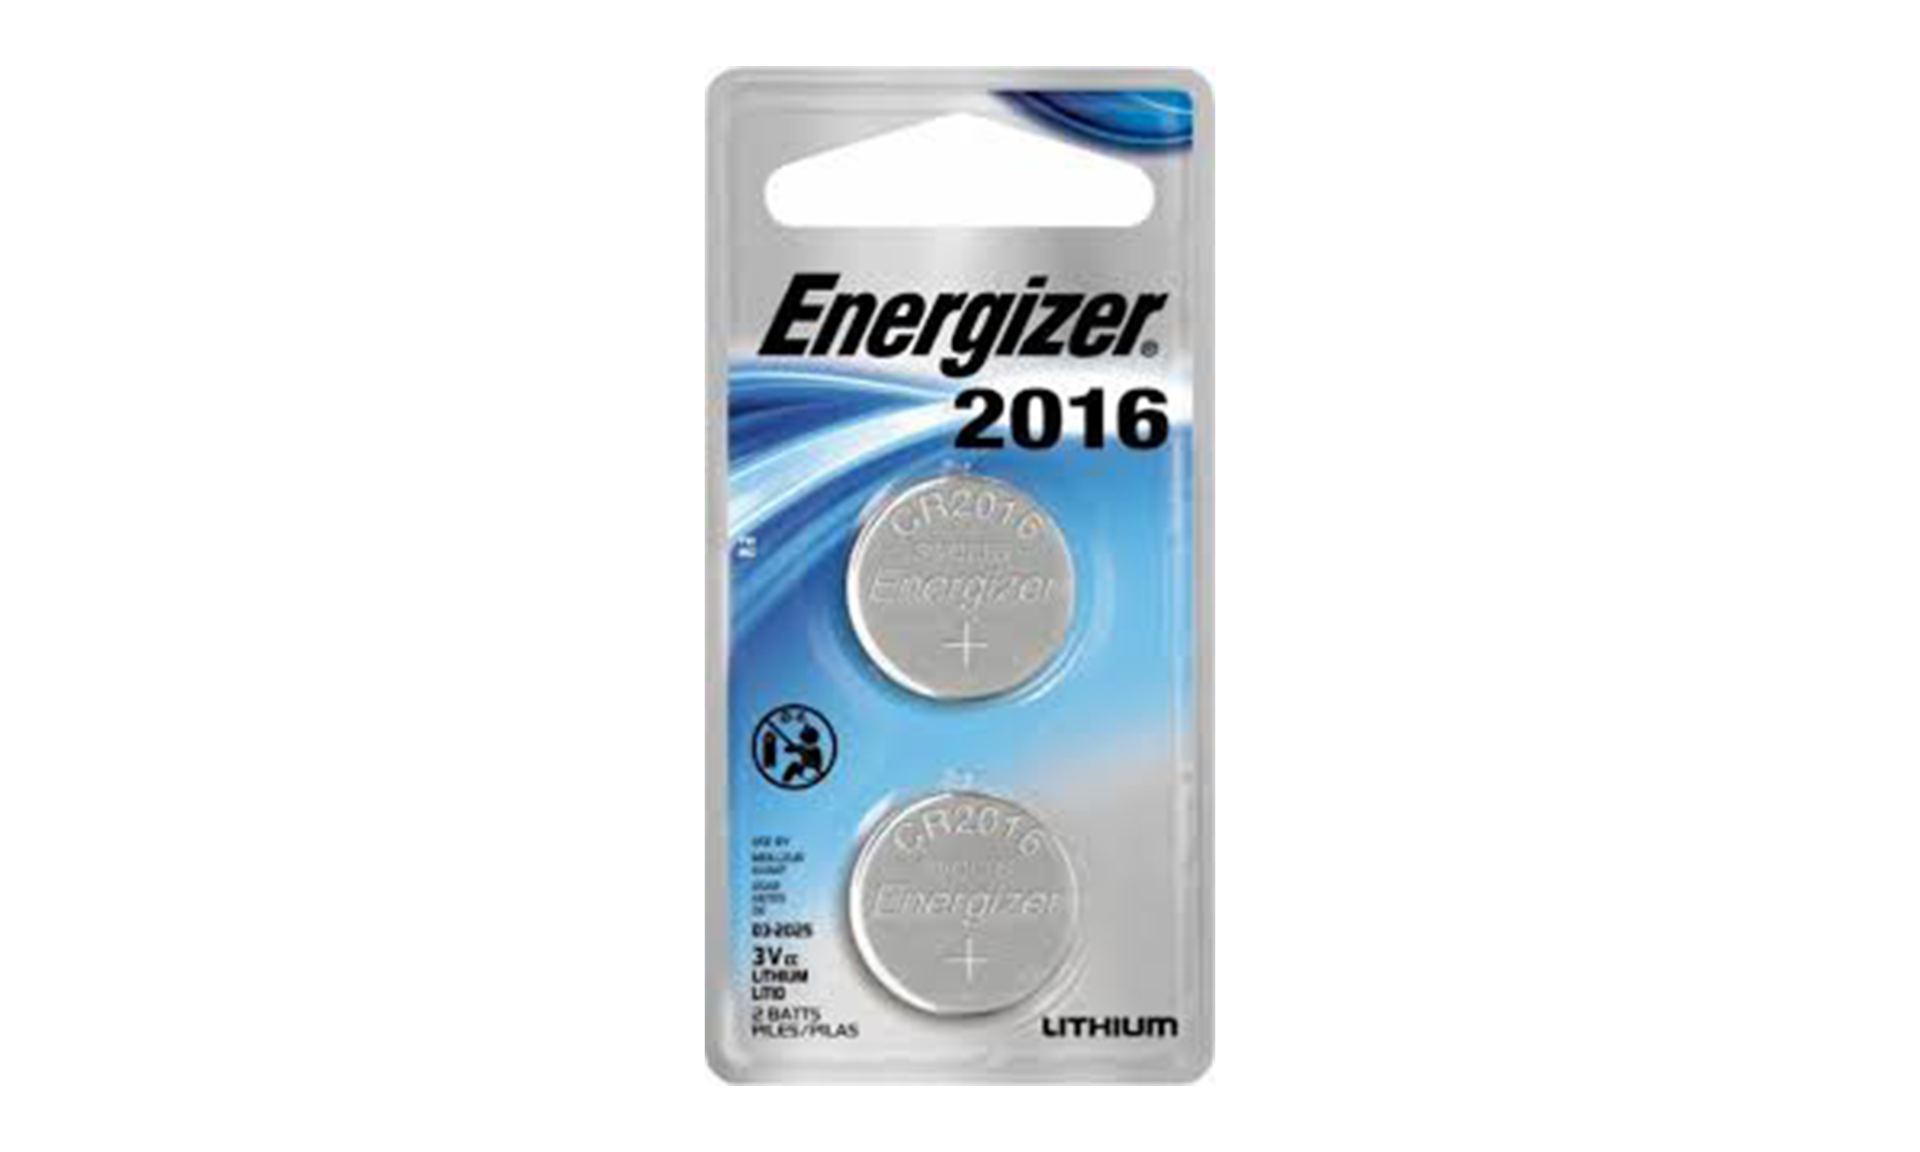 Energizer ECR2016 Battery 3V Lithium Coin Cell (2PC Blister Pack) (Child Resistant Packaging)